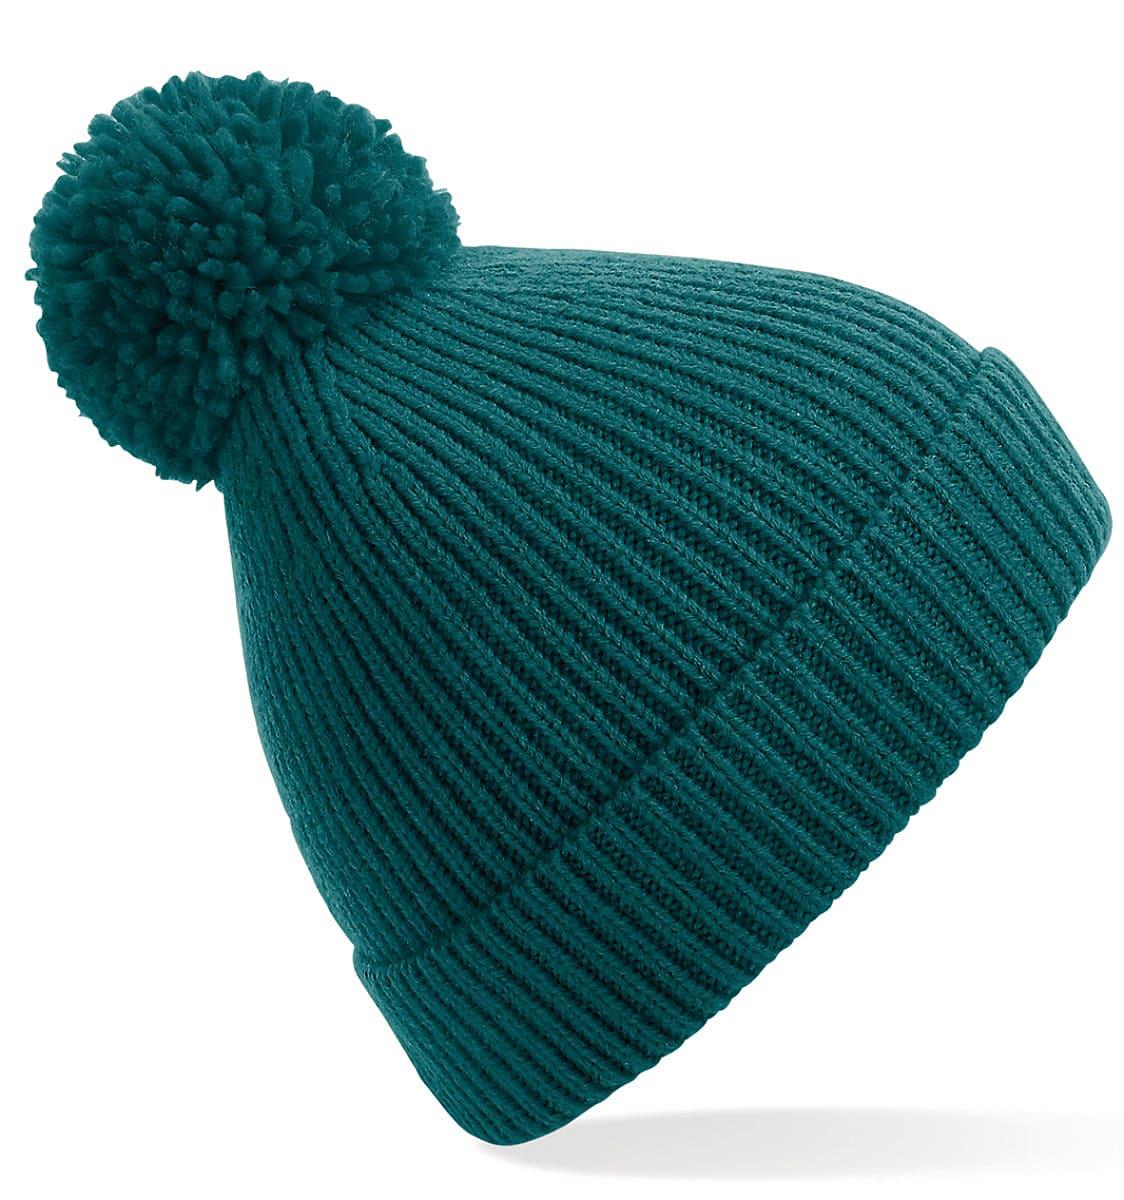 Beechfield Knit Ribbed Pom Pom Beanie Hat in Ocean Green (Product Code: B382)